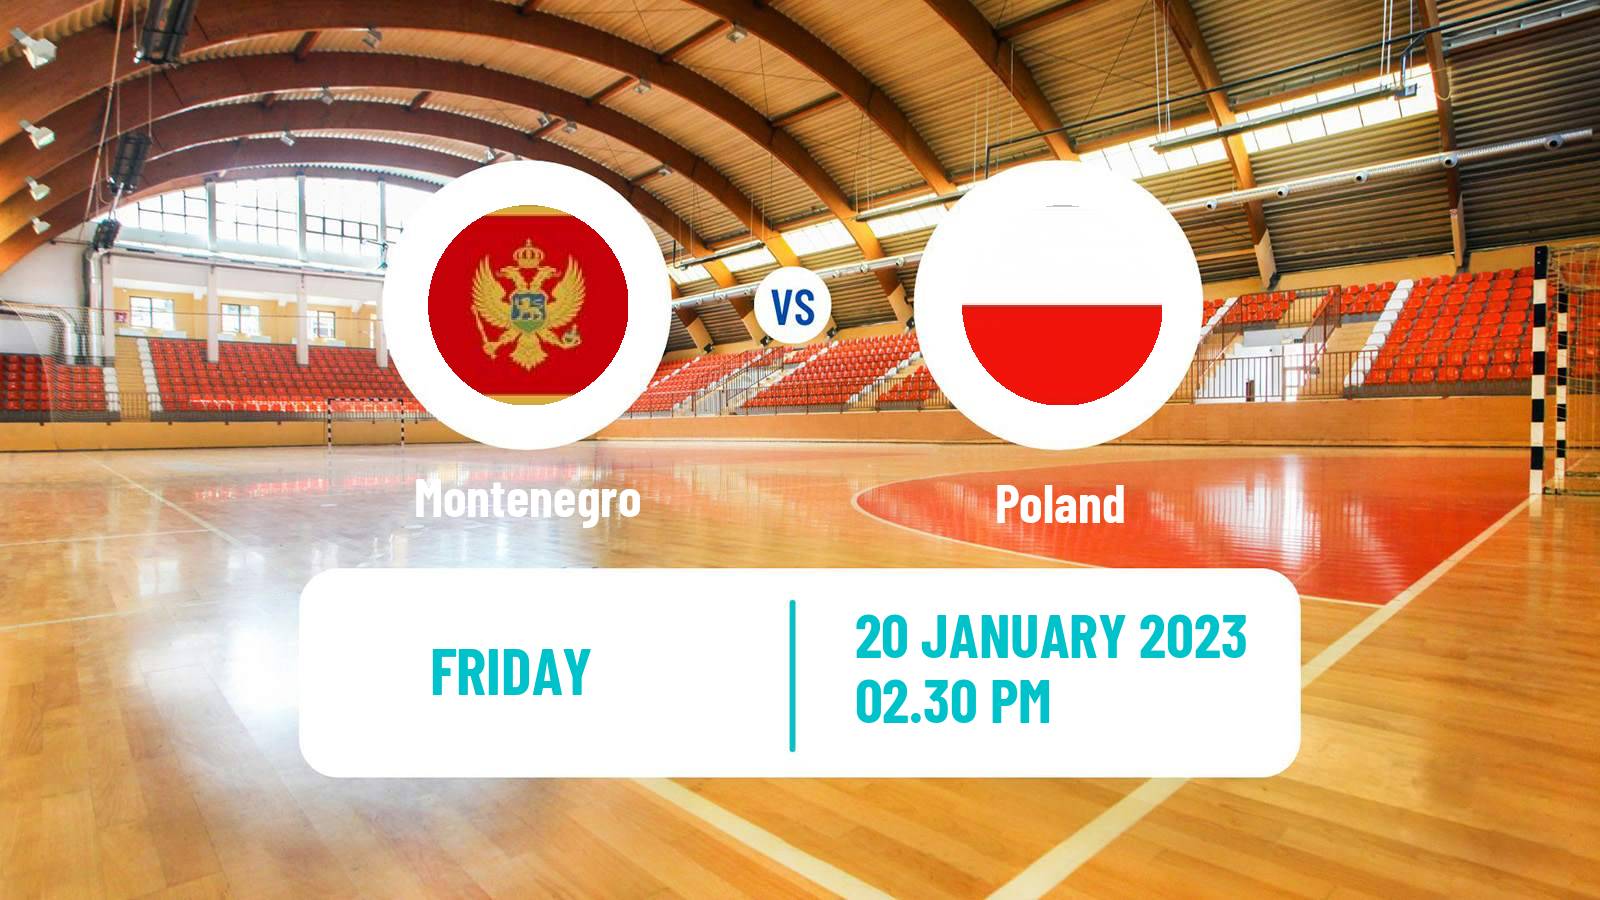 Handball Handball World Championship Montenegro - Poland